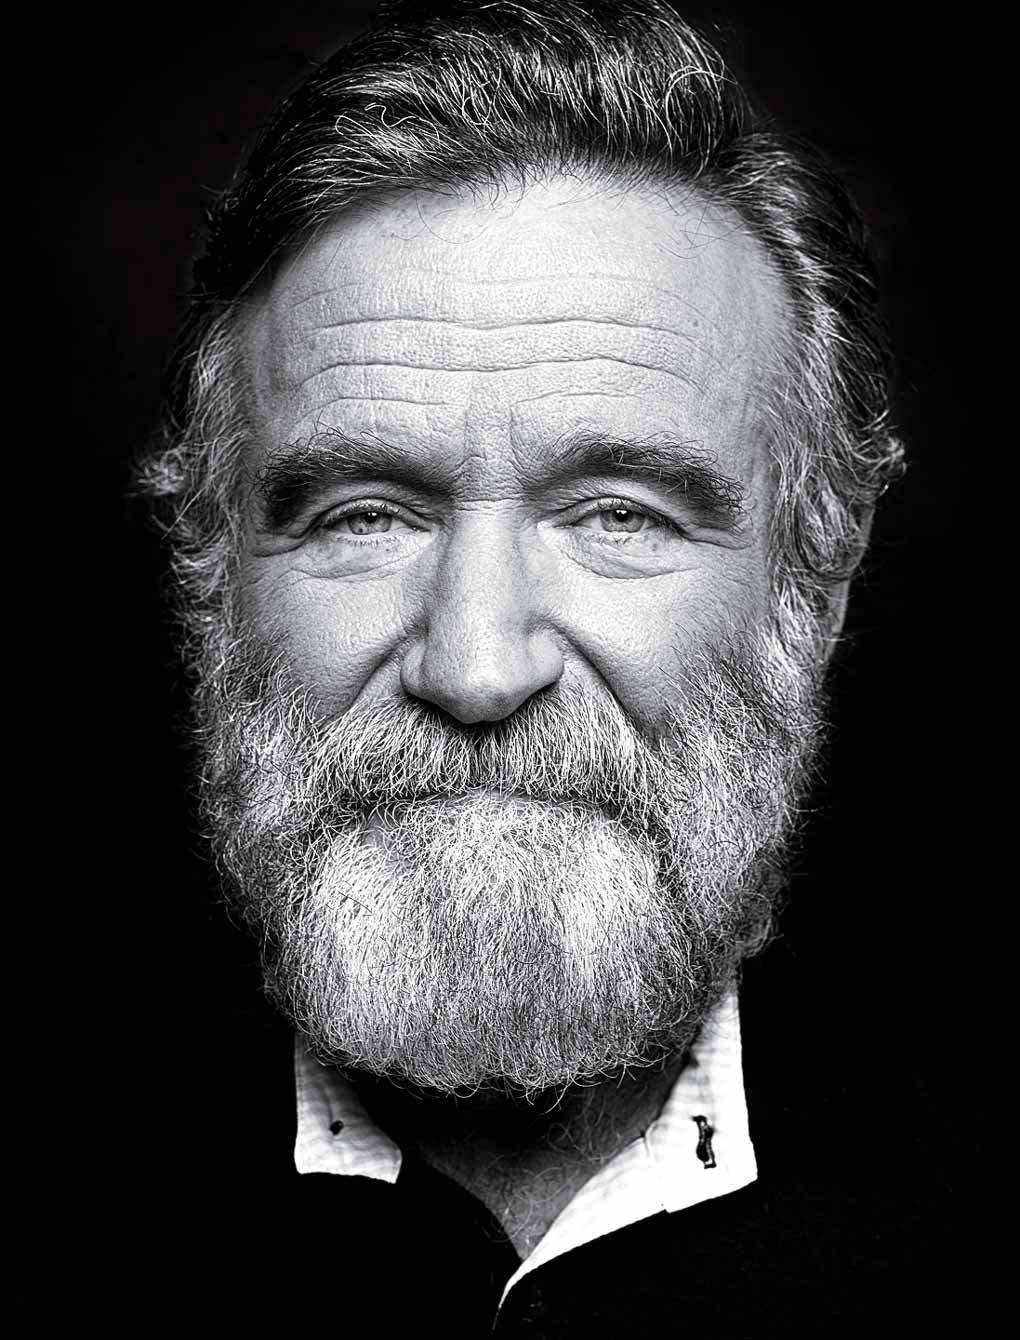 Robin Williams Emotional Black And White Portrait Wallpaper